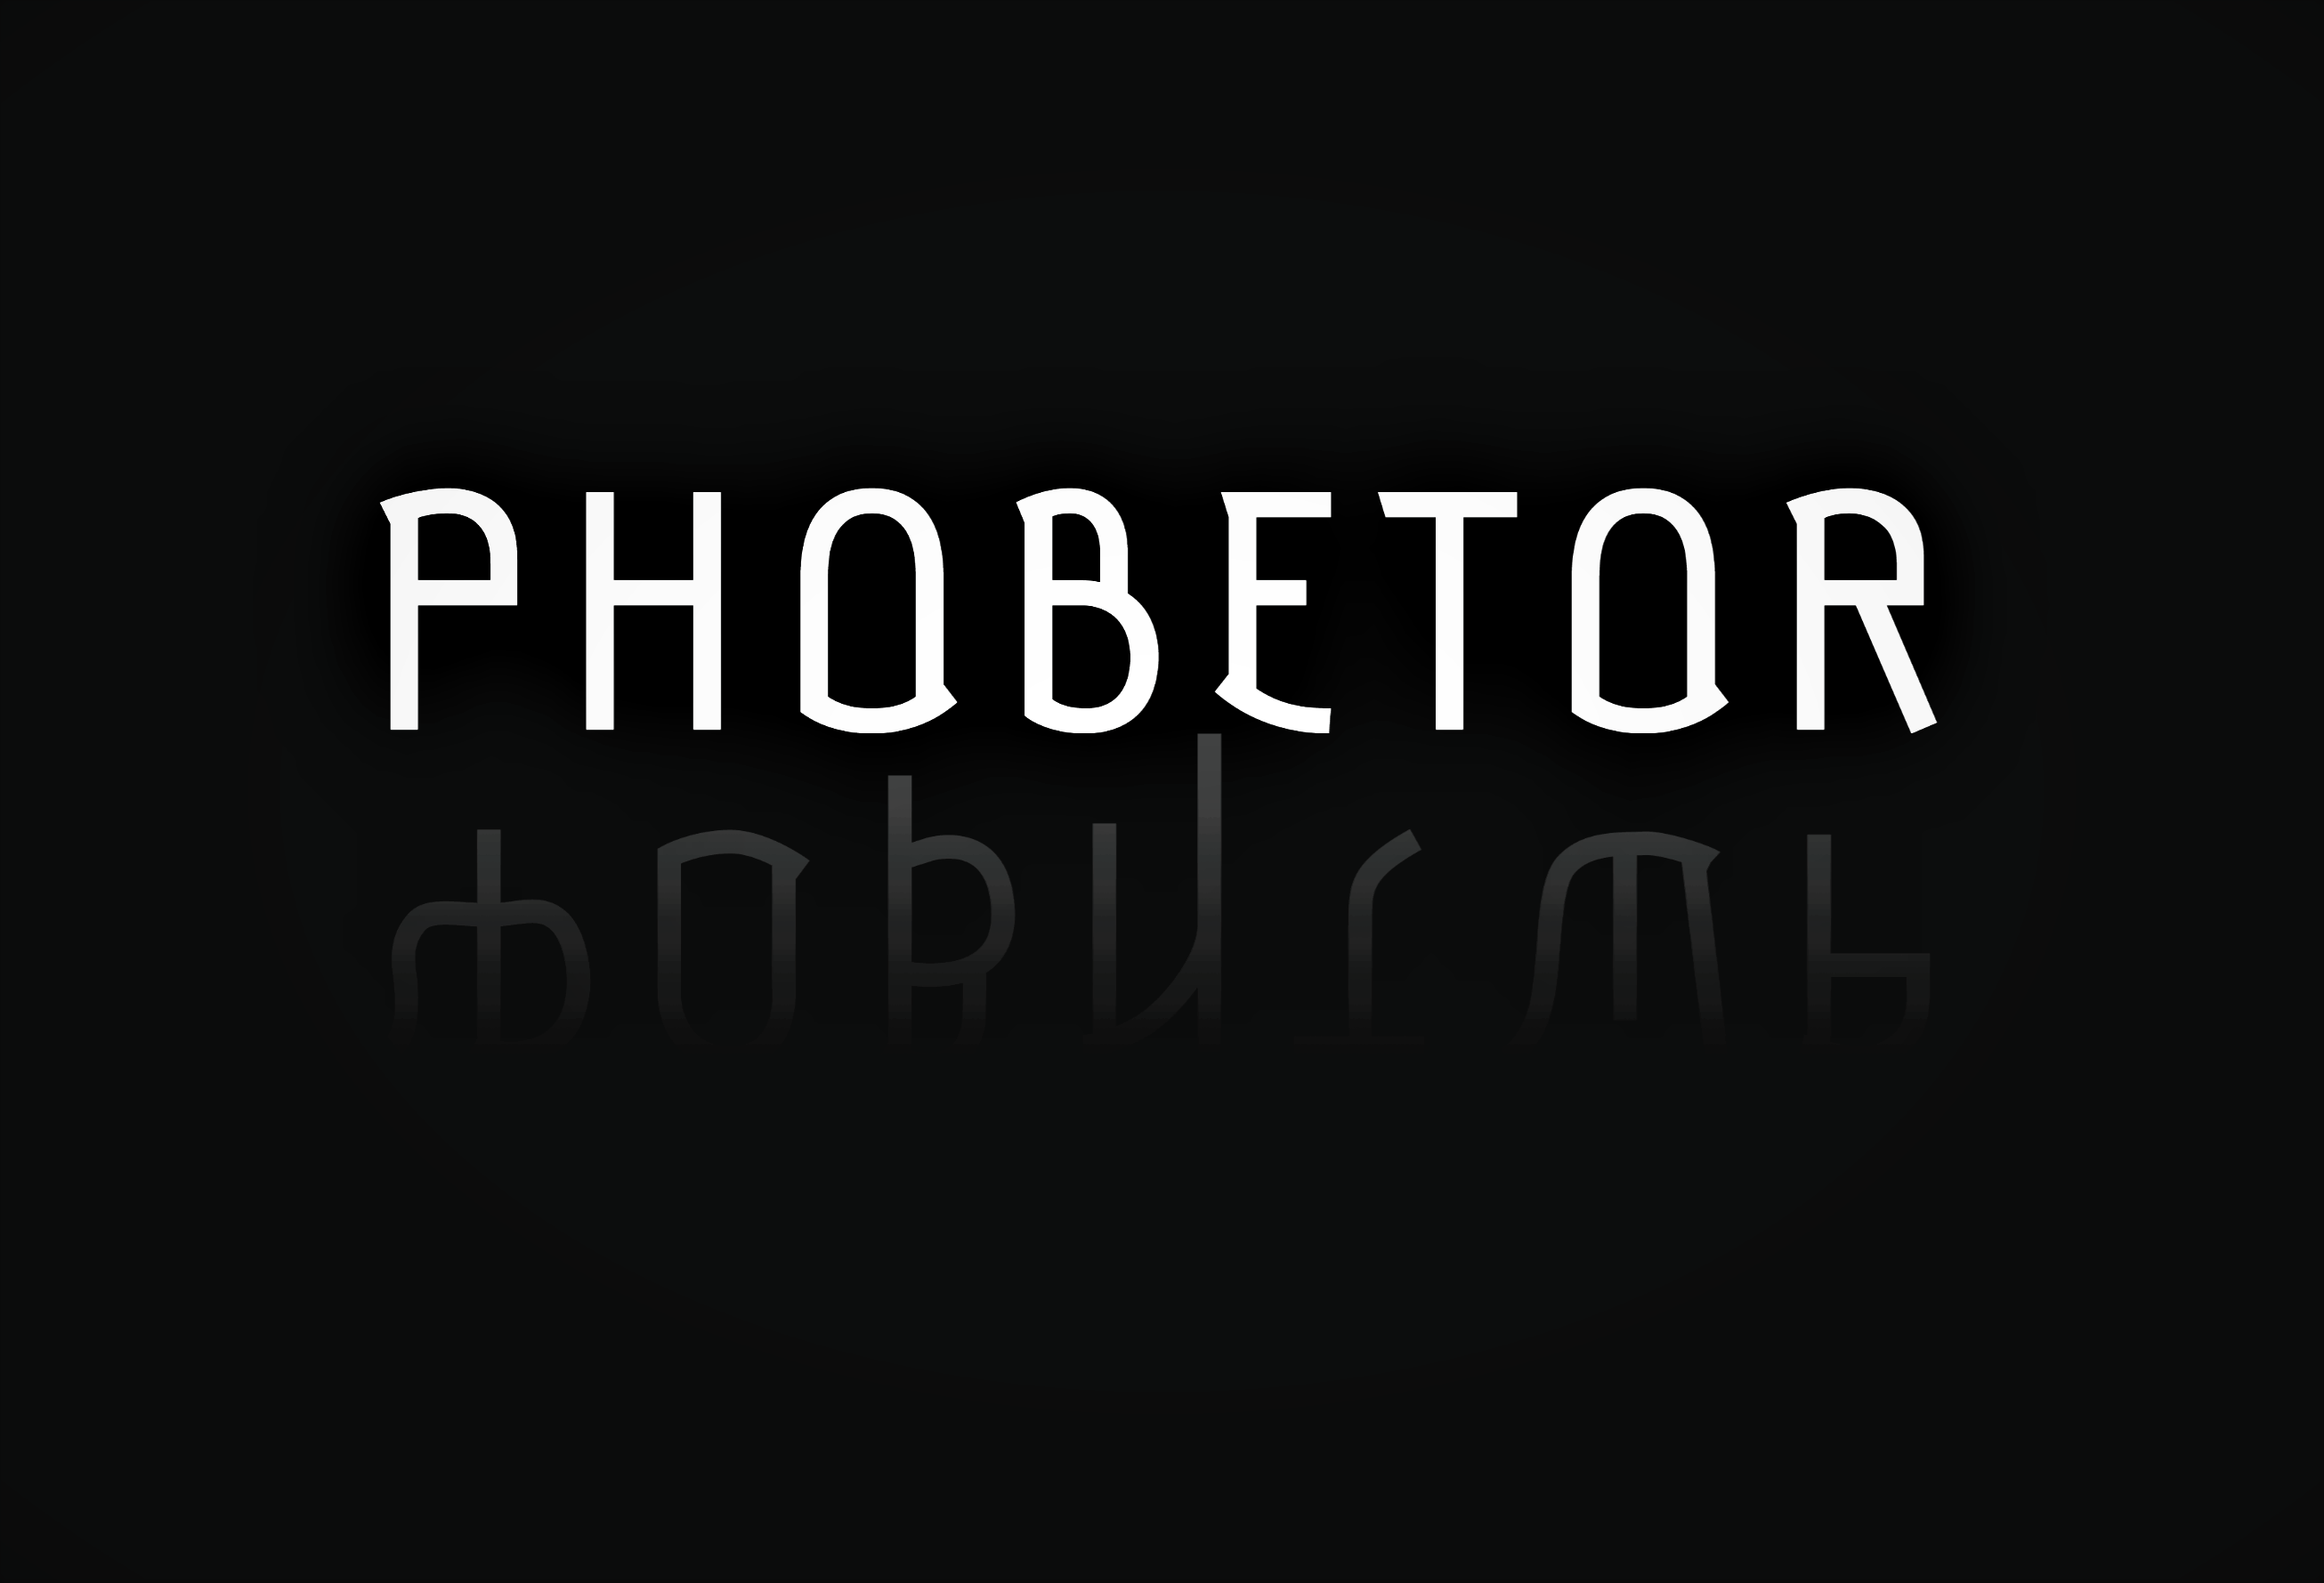 Phobetor